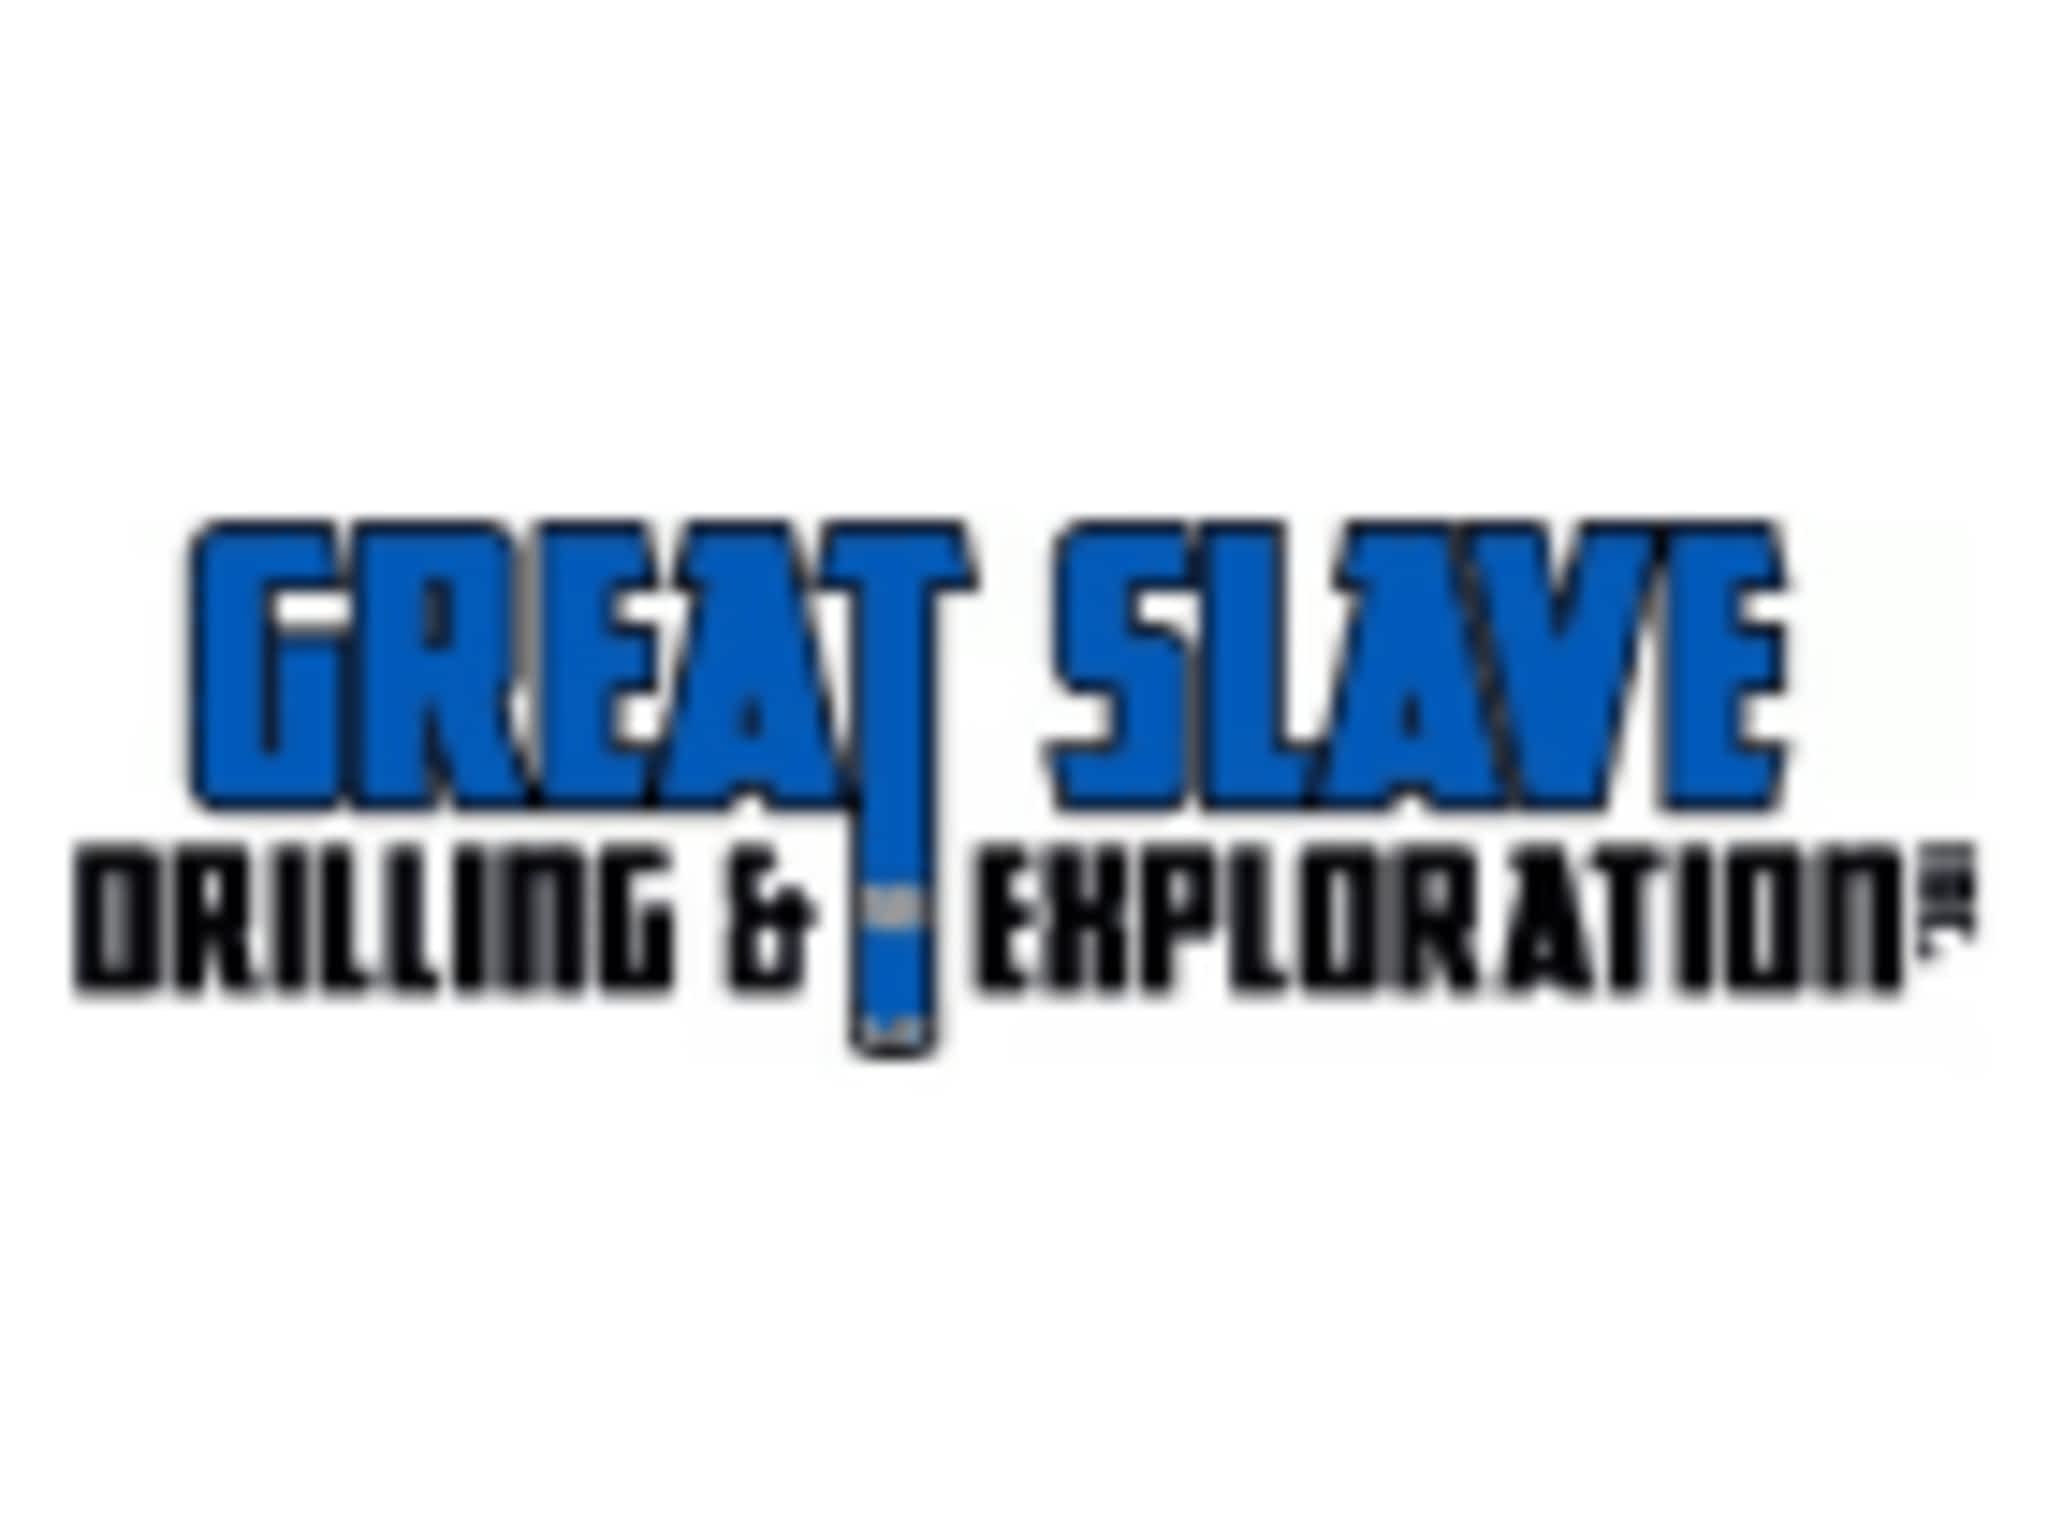 photo Great Slave Drilling & Exploration